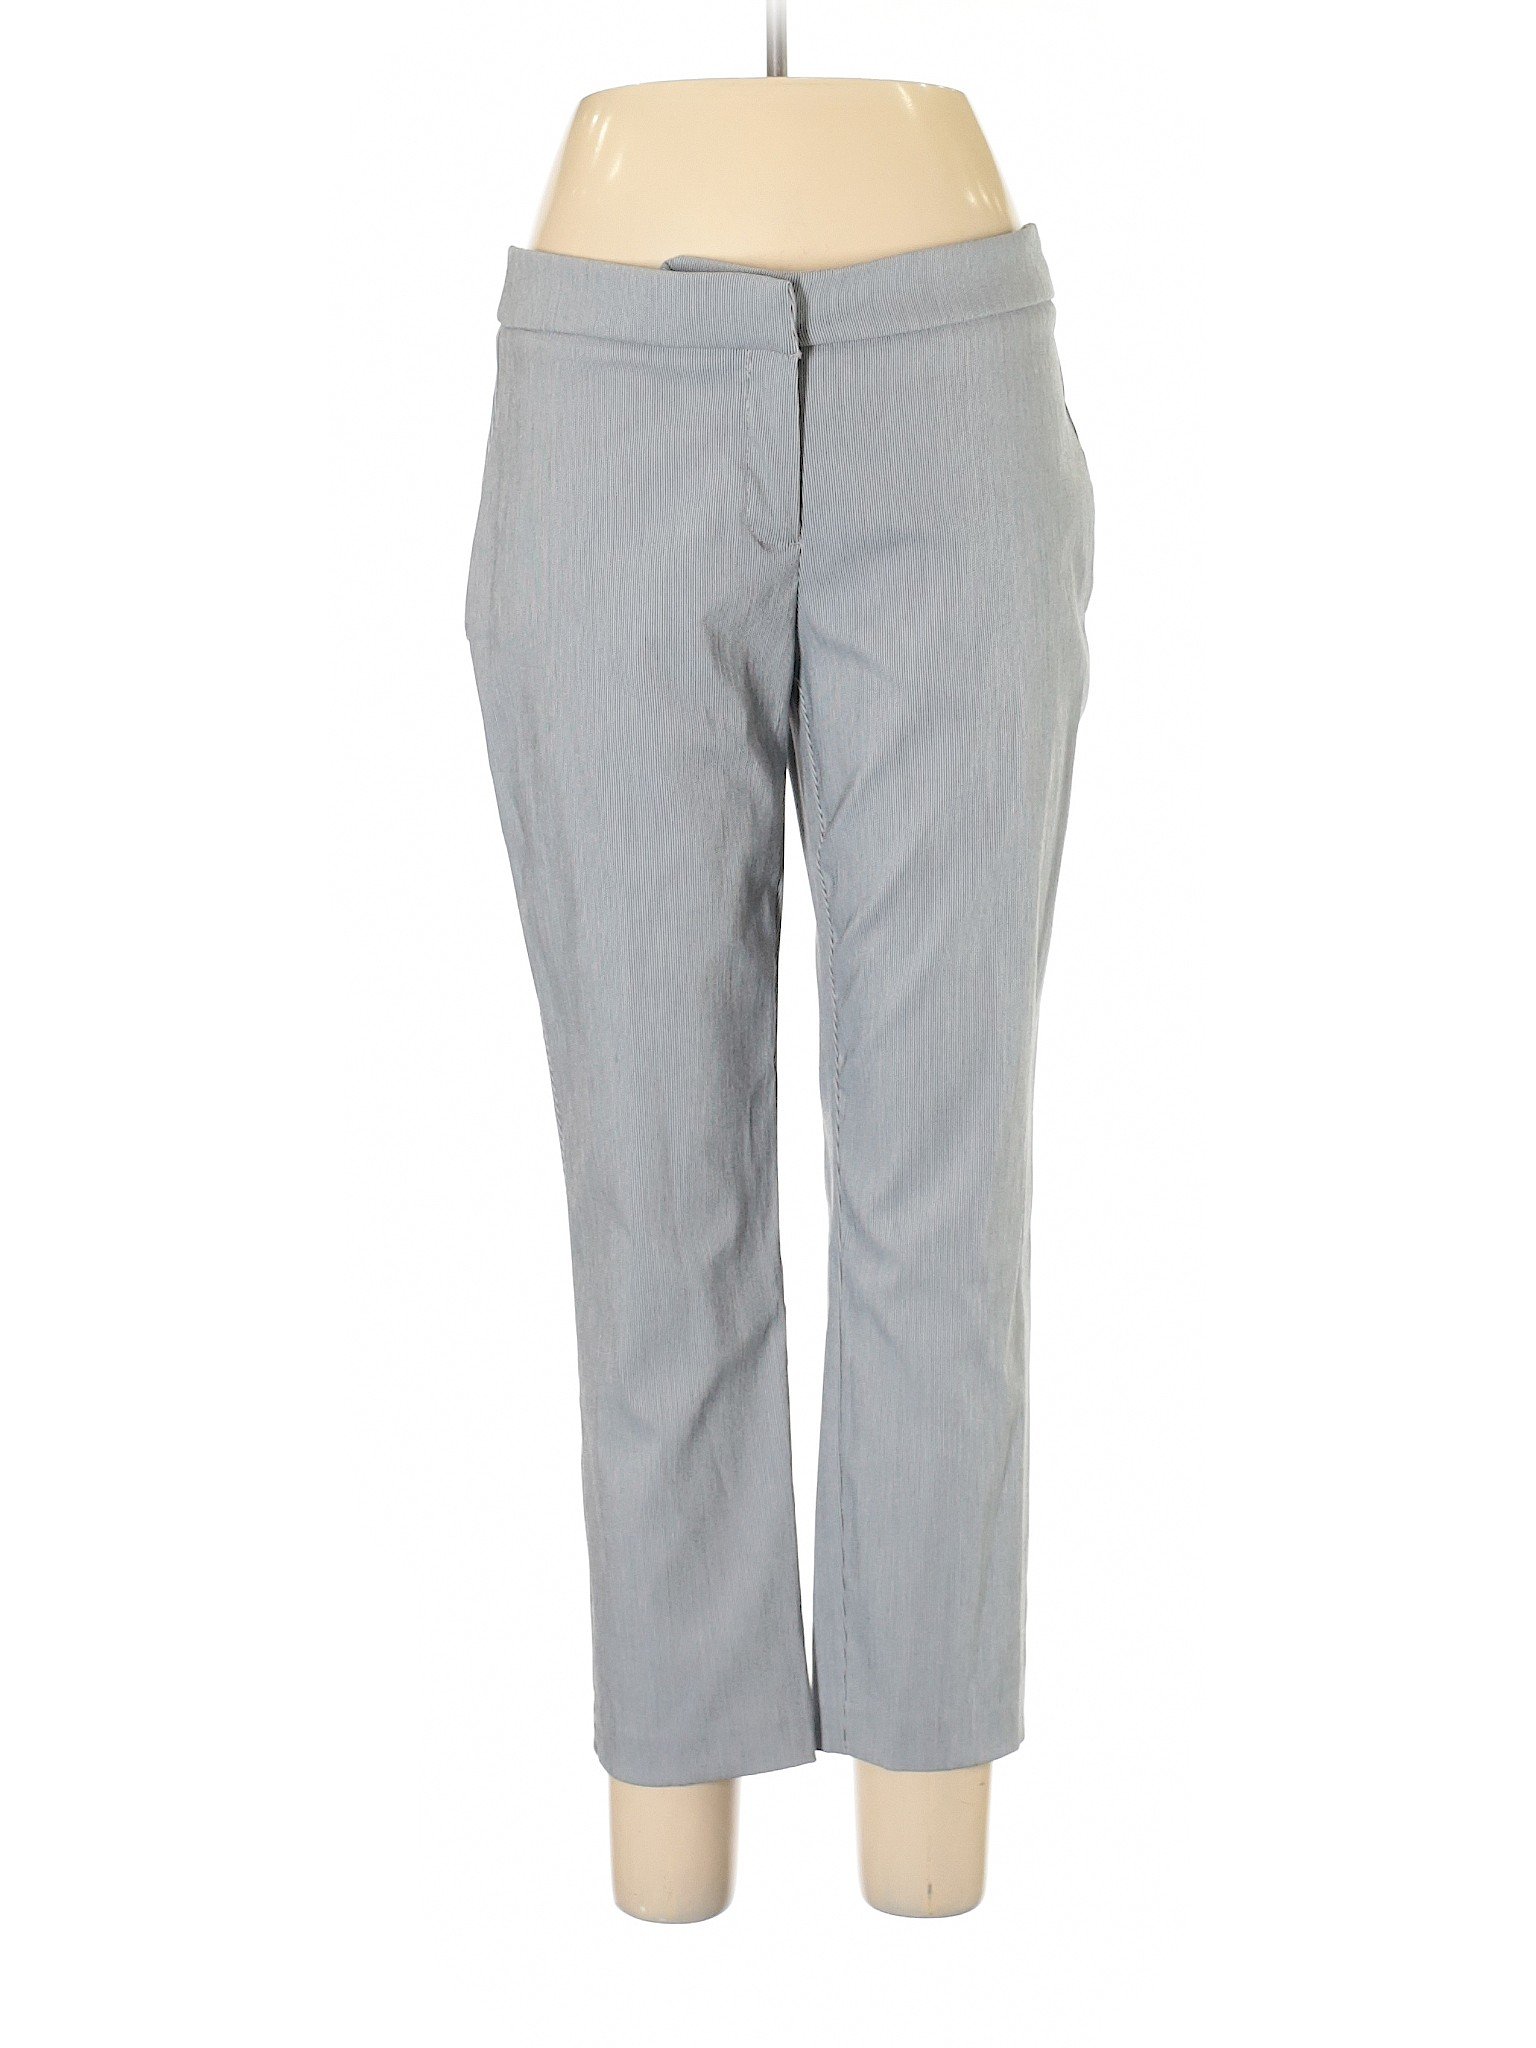 Eliane Rose Women Gray Dress Pants 12 | eBay